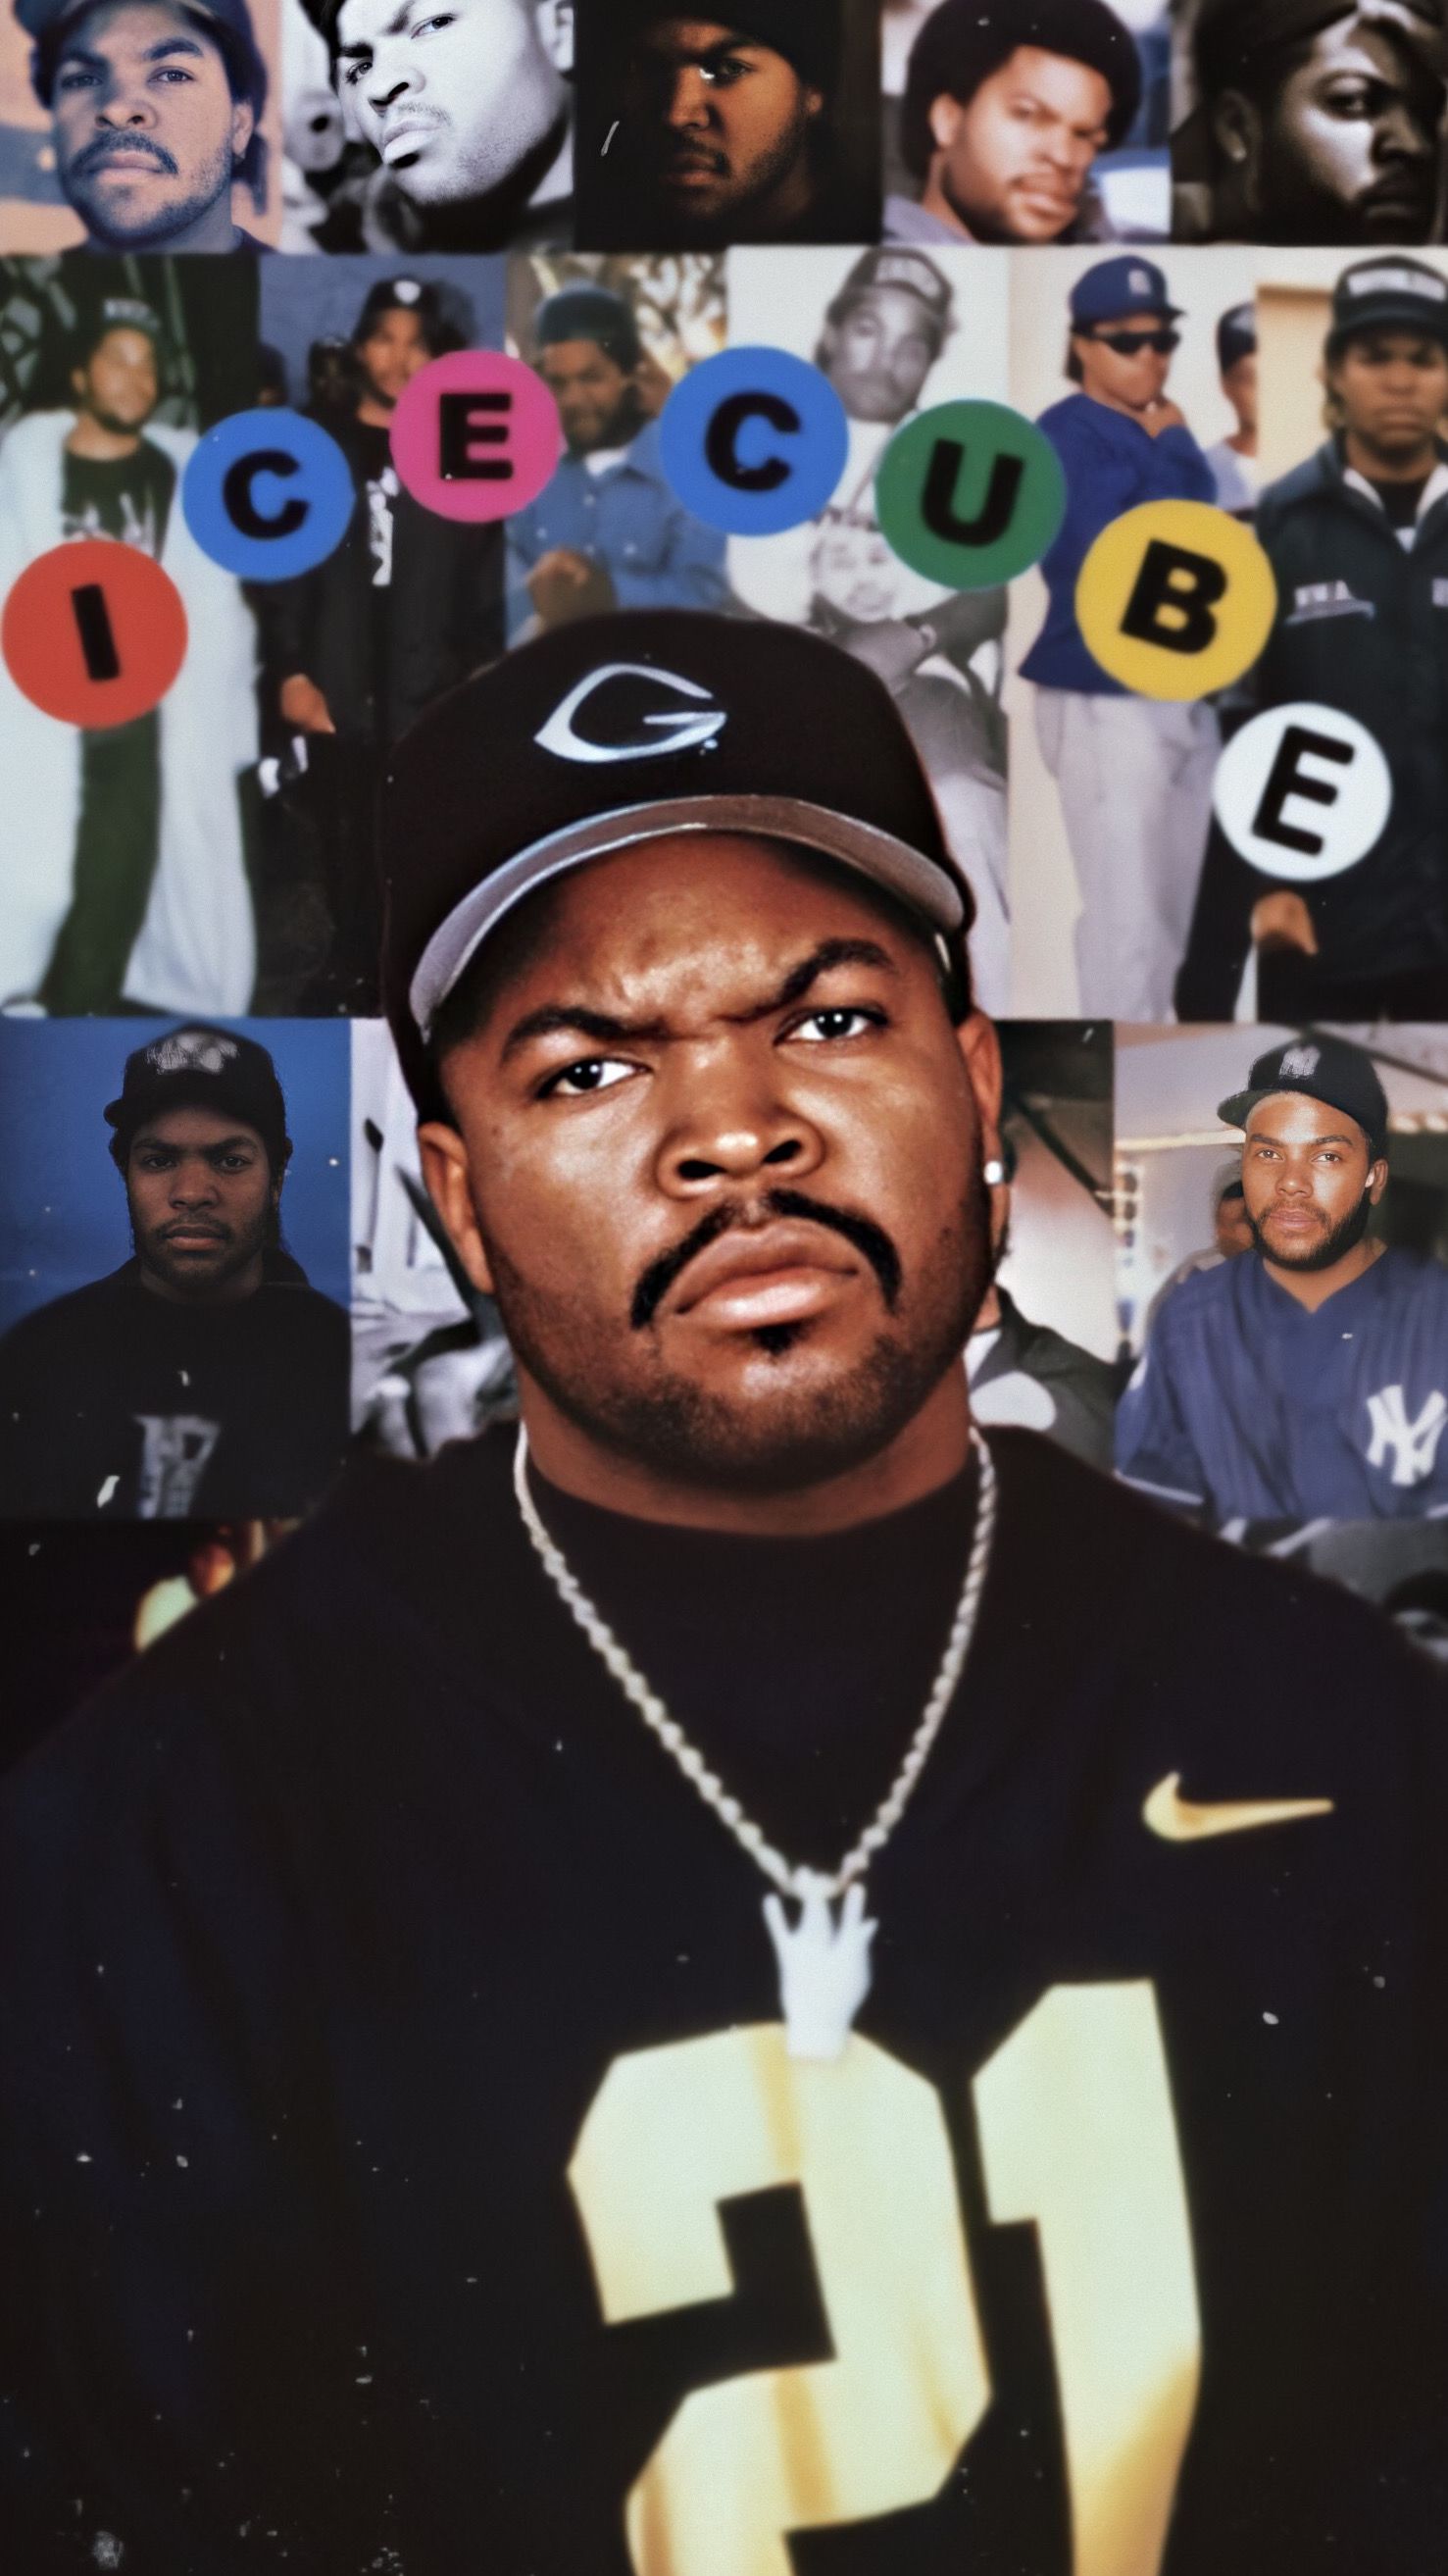 Ice Cube Wallpaper. Rap wallpaper, Tupac wallpaper, 90s rappers aesthetic